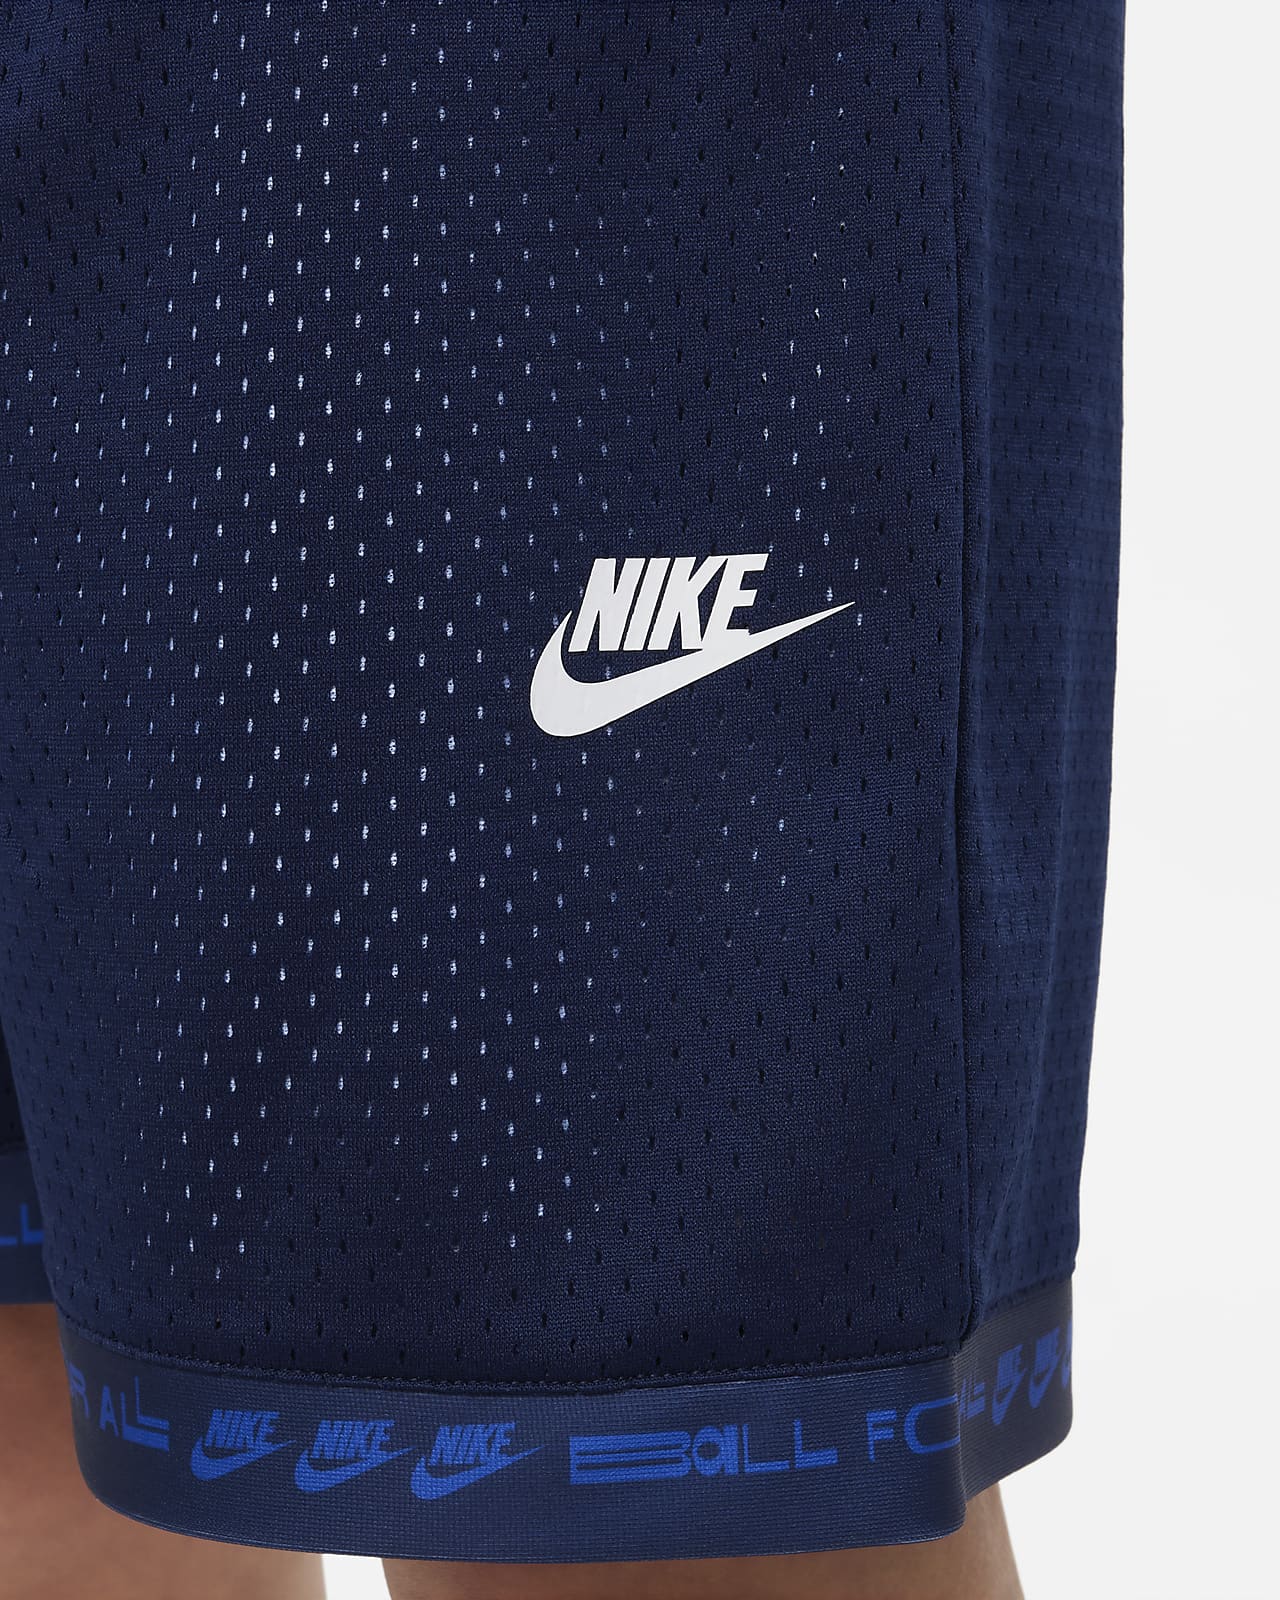 Nike Culture of Basketball Older Kids' Reversible Basketball Shorts ...